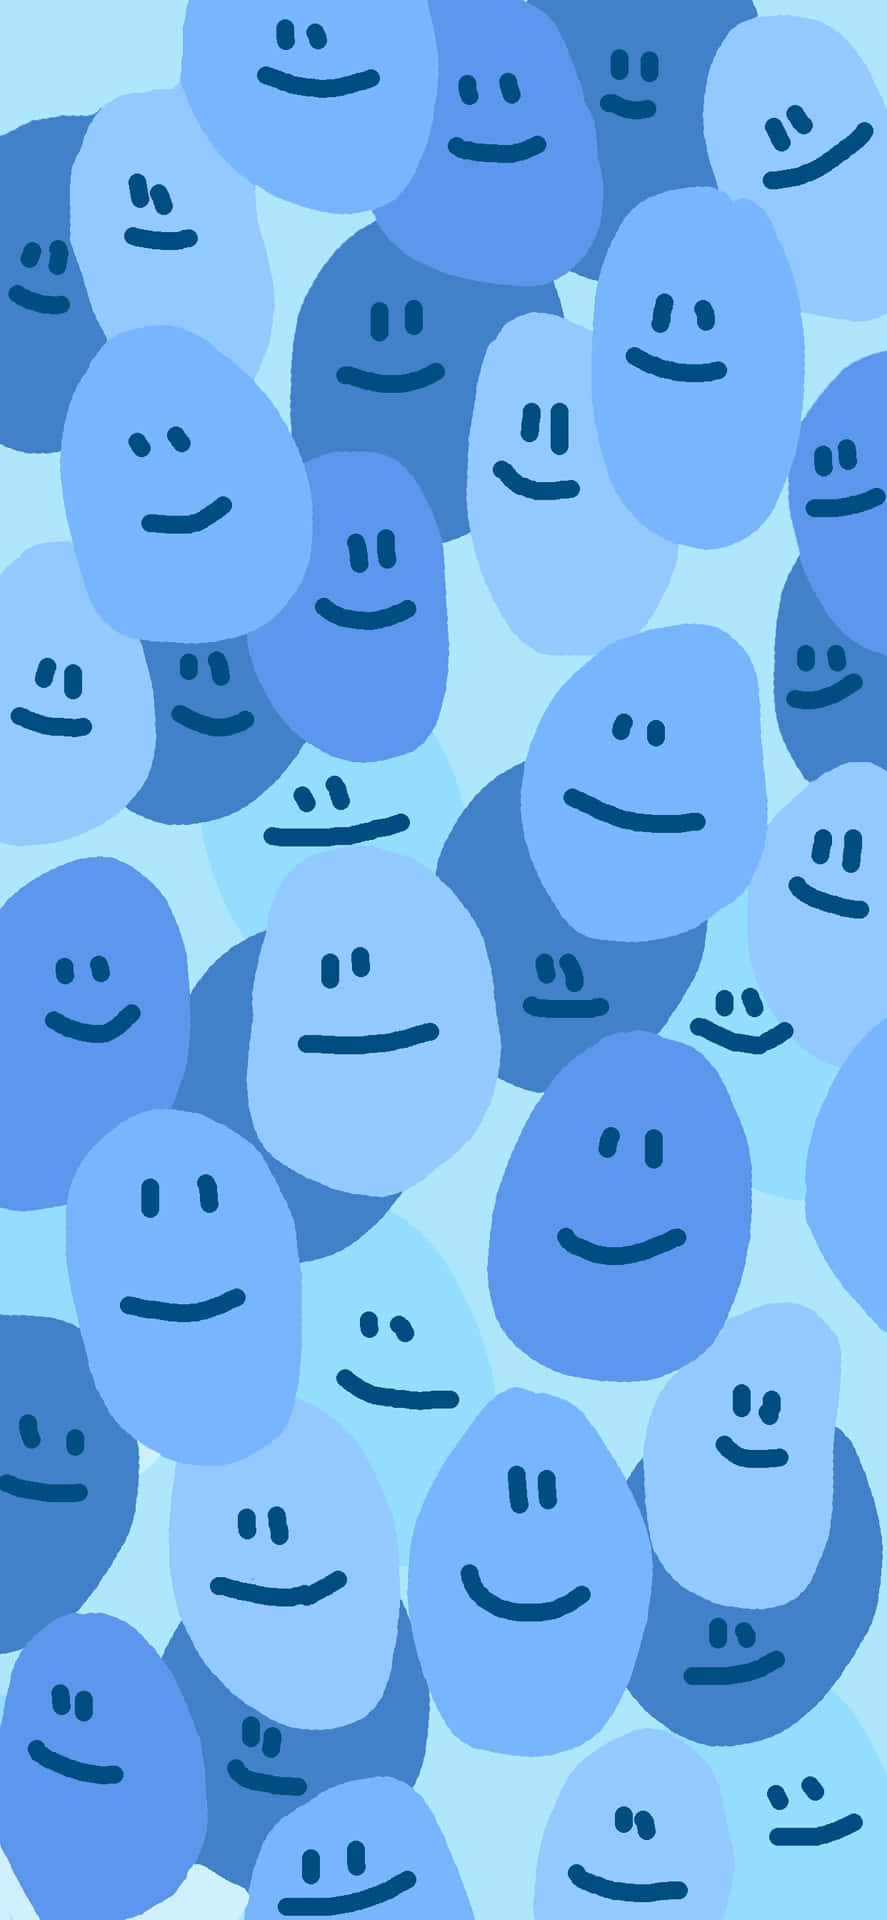 Blue Smiley Faces Pattern.jpg Wallpaper